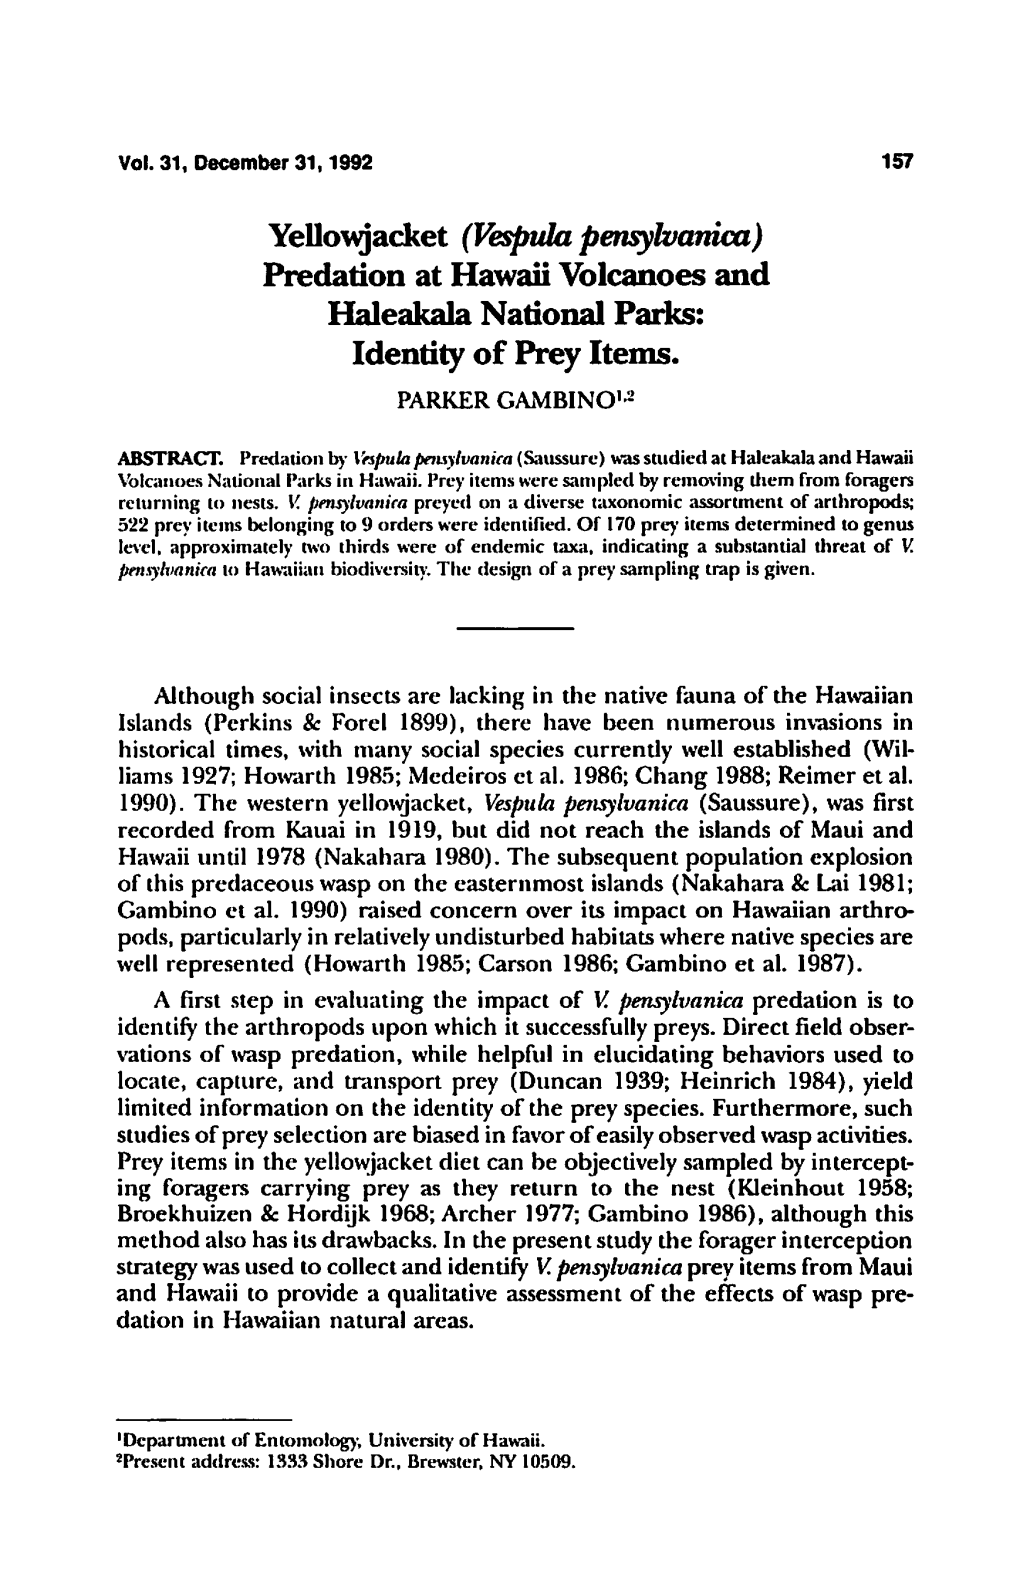 Yellowjacket (Vespula Pensylvanica) Predation at Hawaii Volcanoes and Haleakala National Paries: Identity of Prey Items